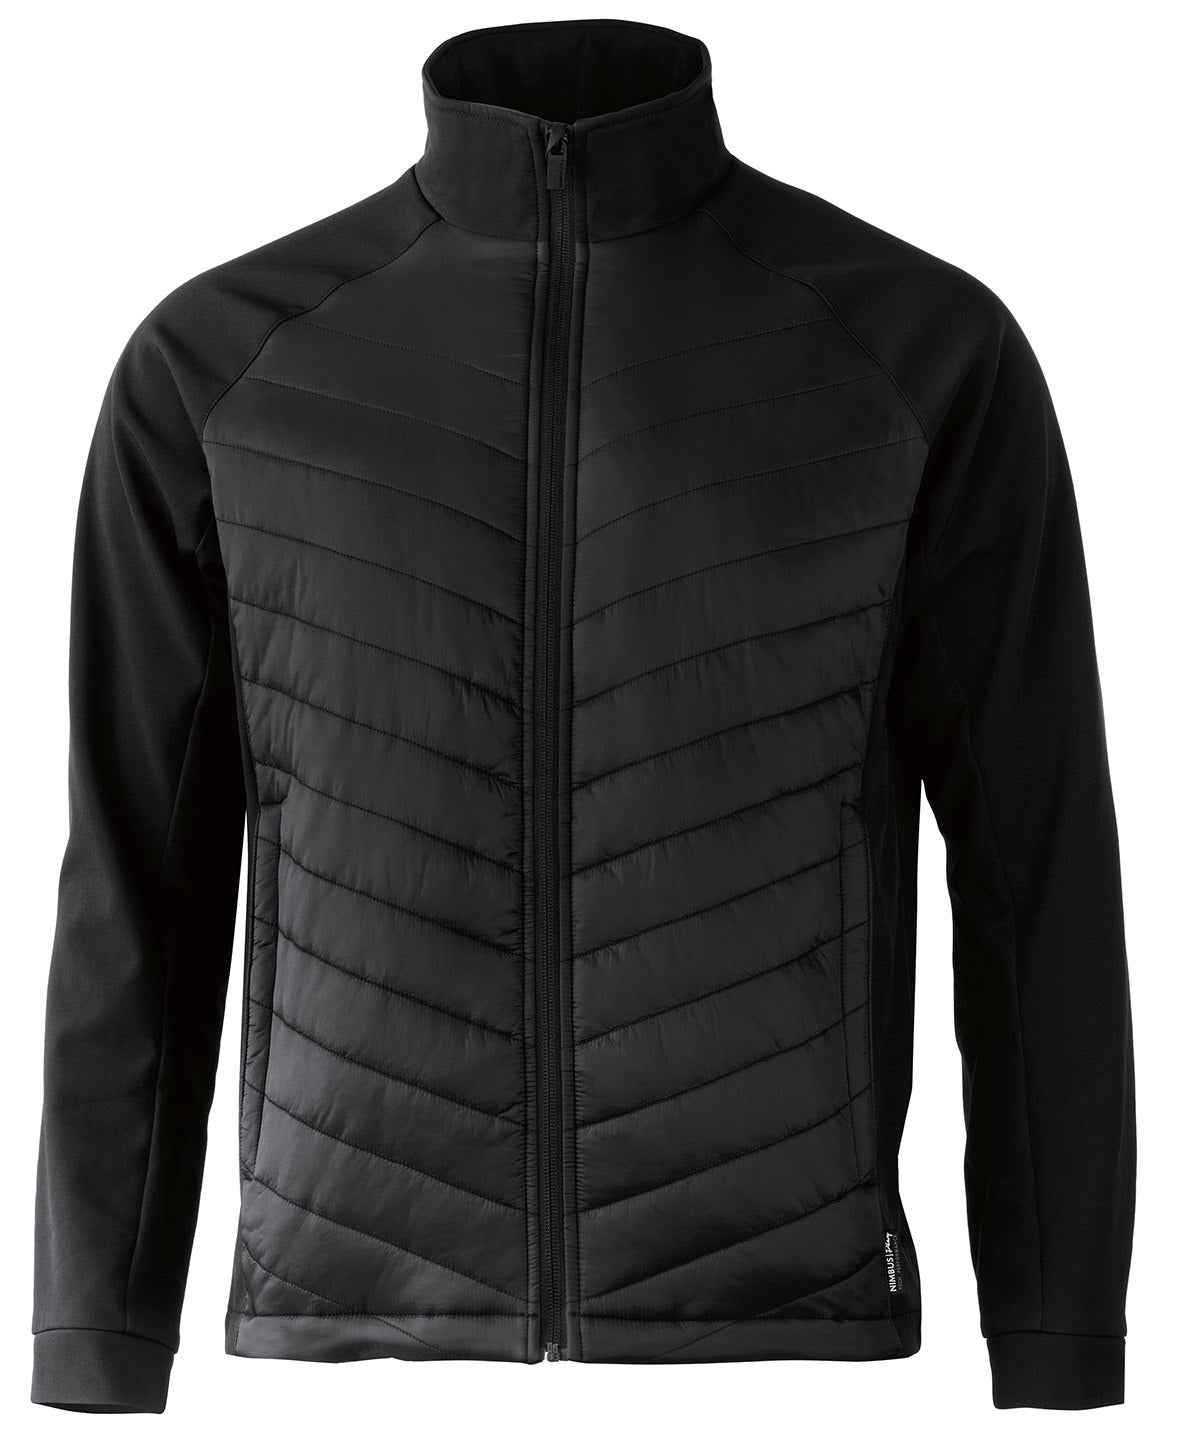 Jakkar - Bloomsdale – Comfortable Hybrid Jacket